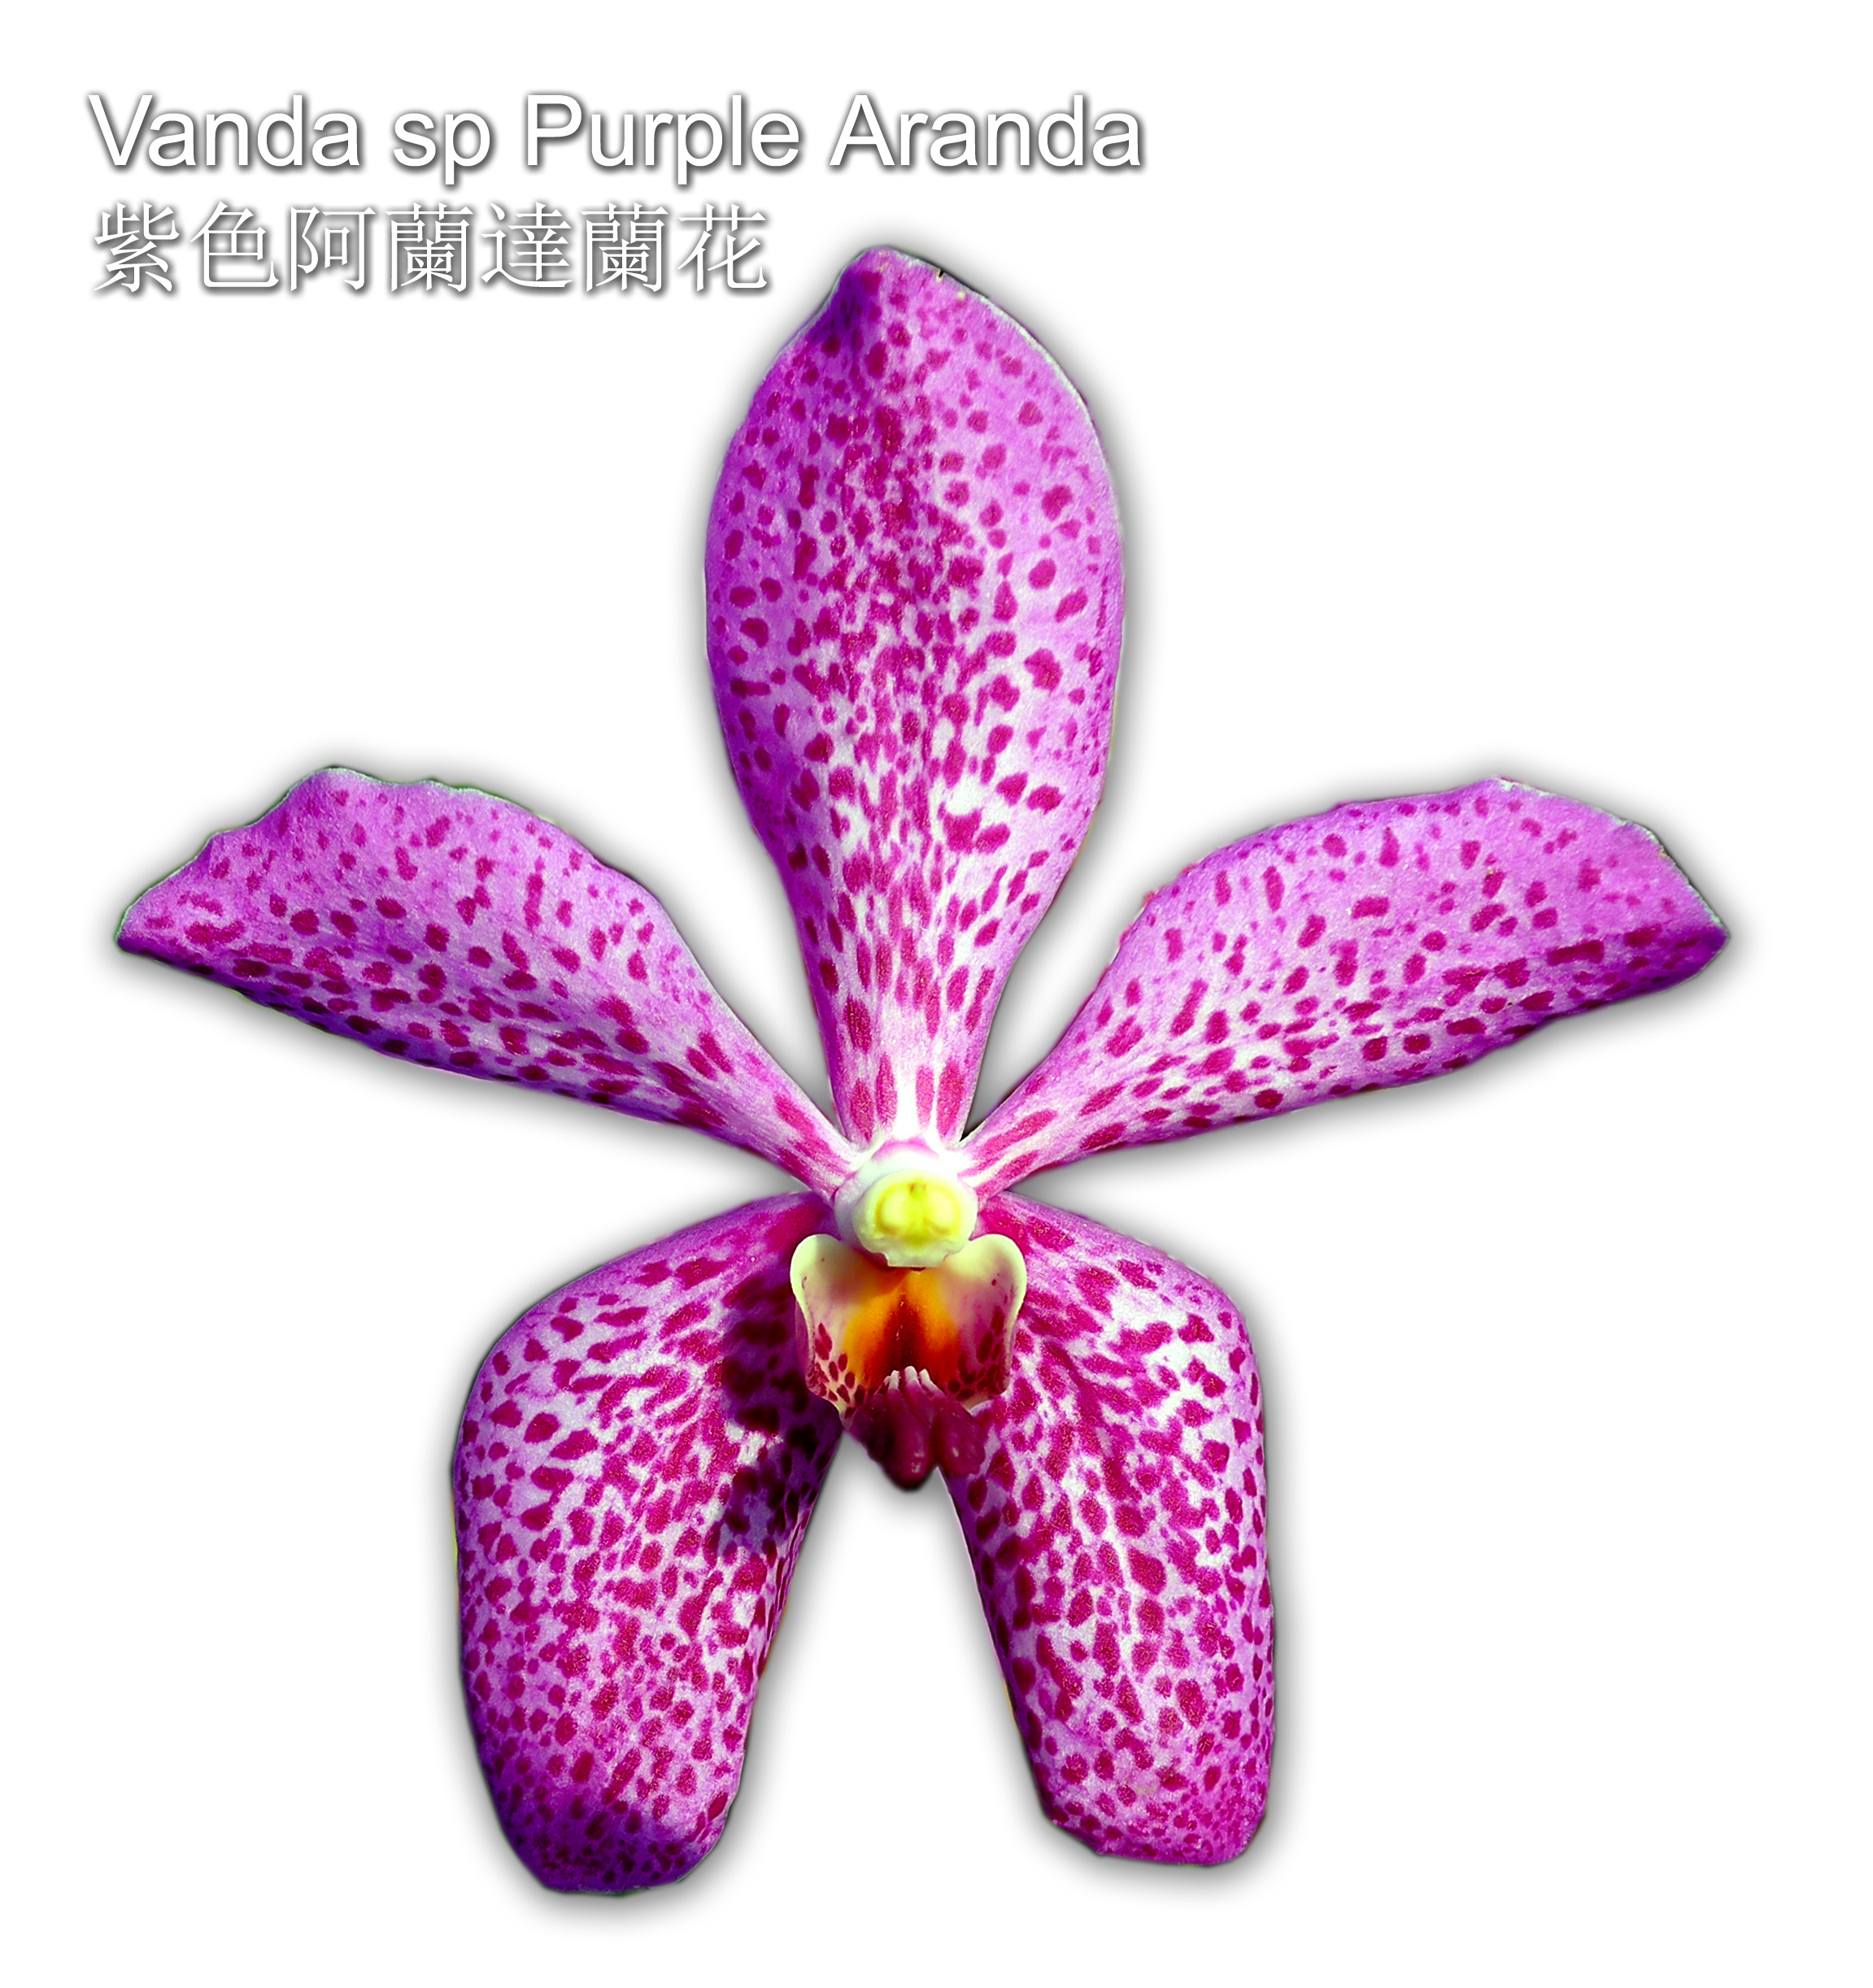 Vanda sp Purple Aranda (Hybrid Orchids) 紫色阿蘭達蘭花(雜交蘭花)